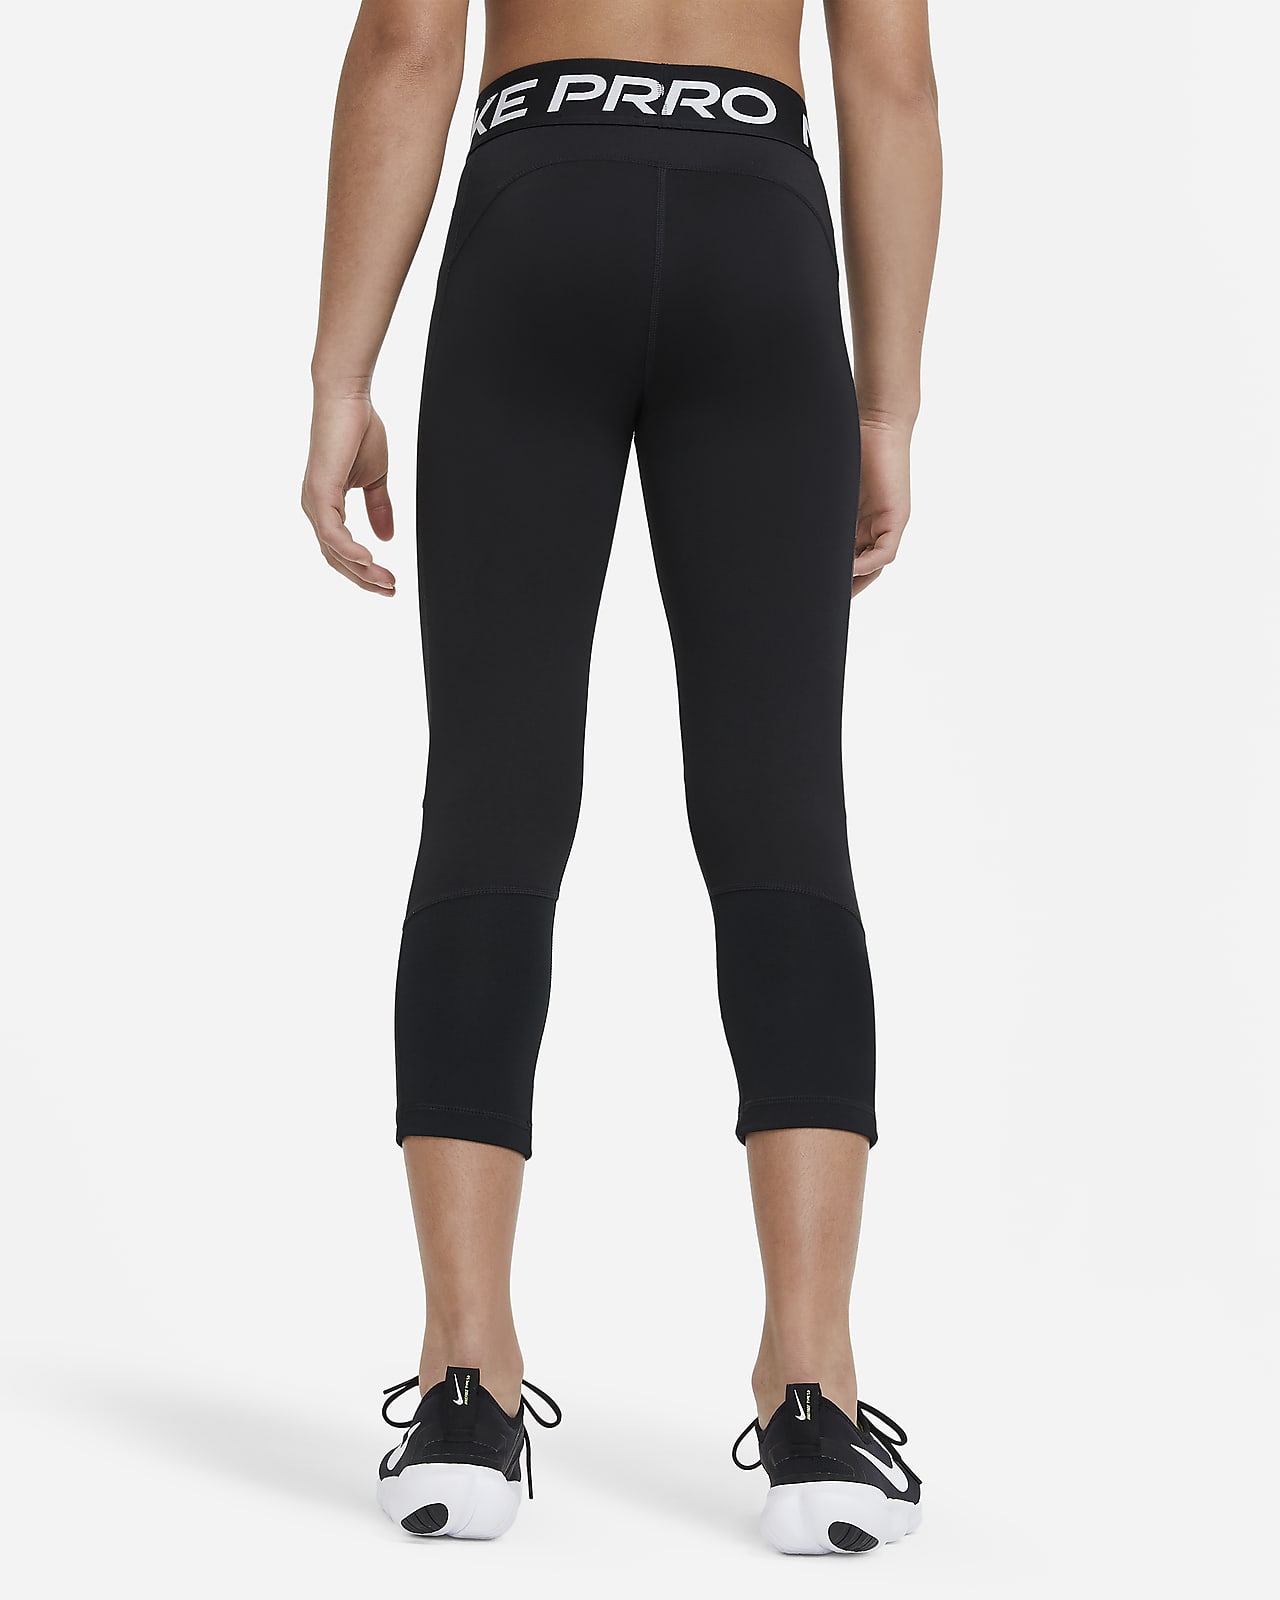 Nike Pro Teen Women's 3/4 Slim Fit Compression Tights - Black